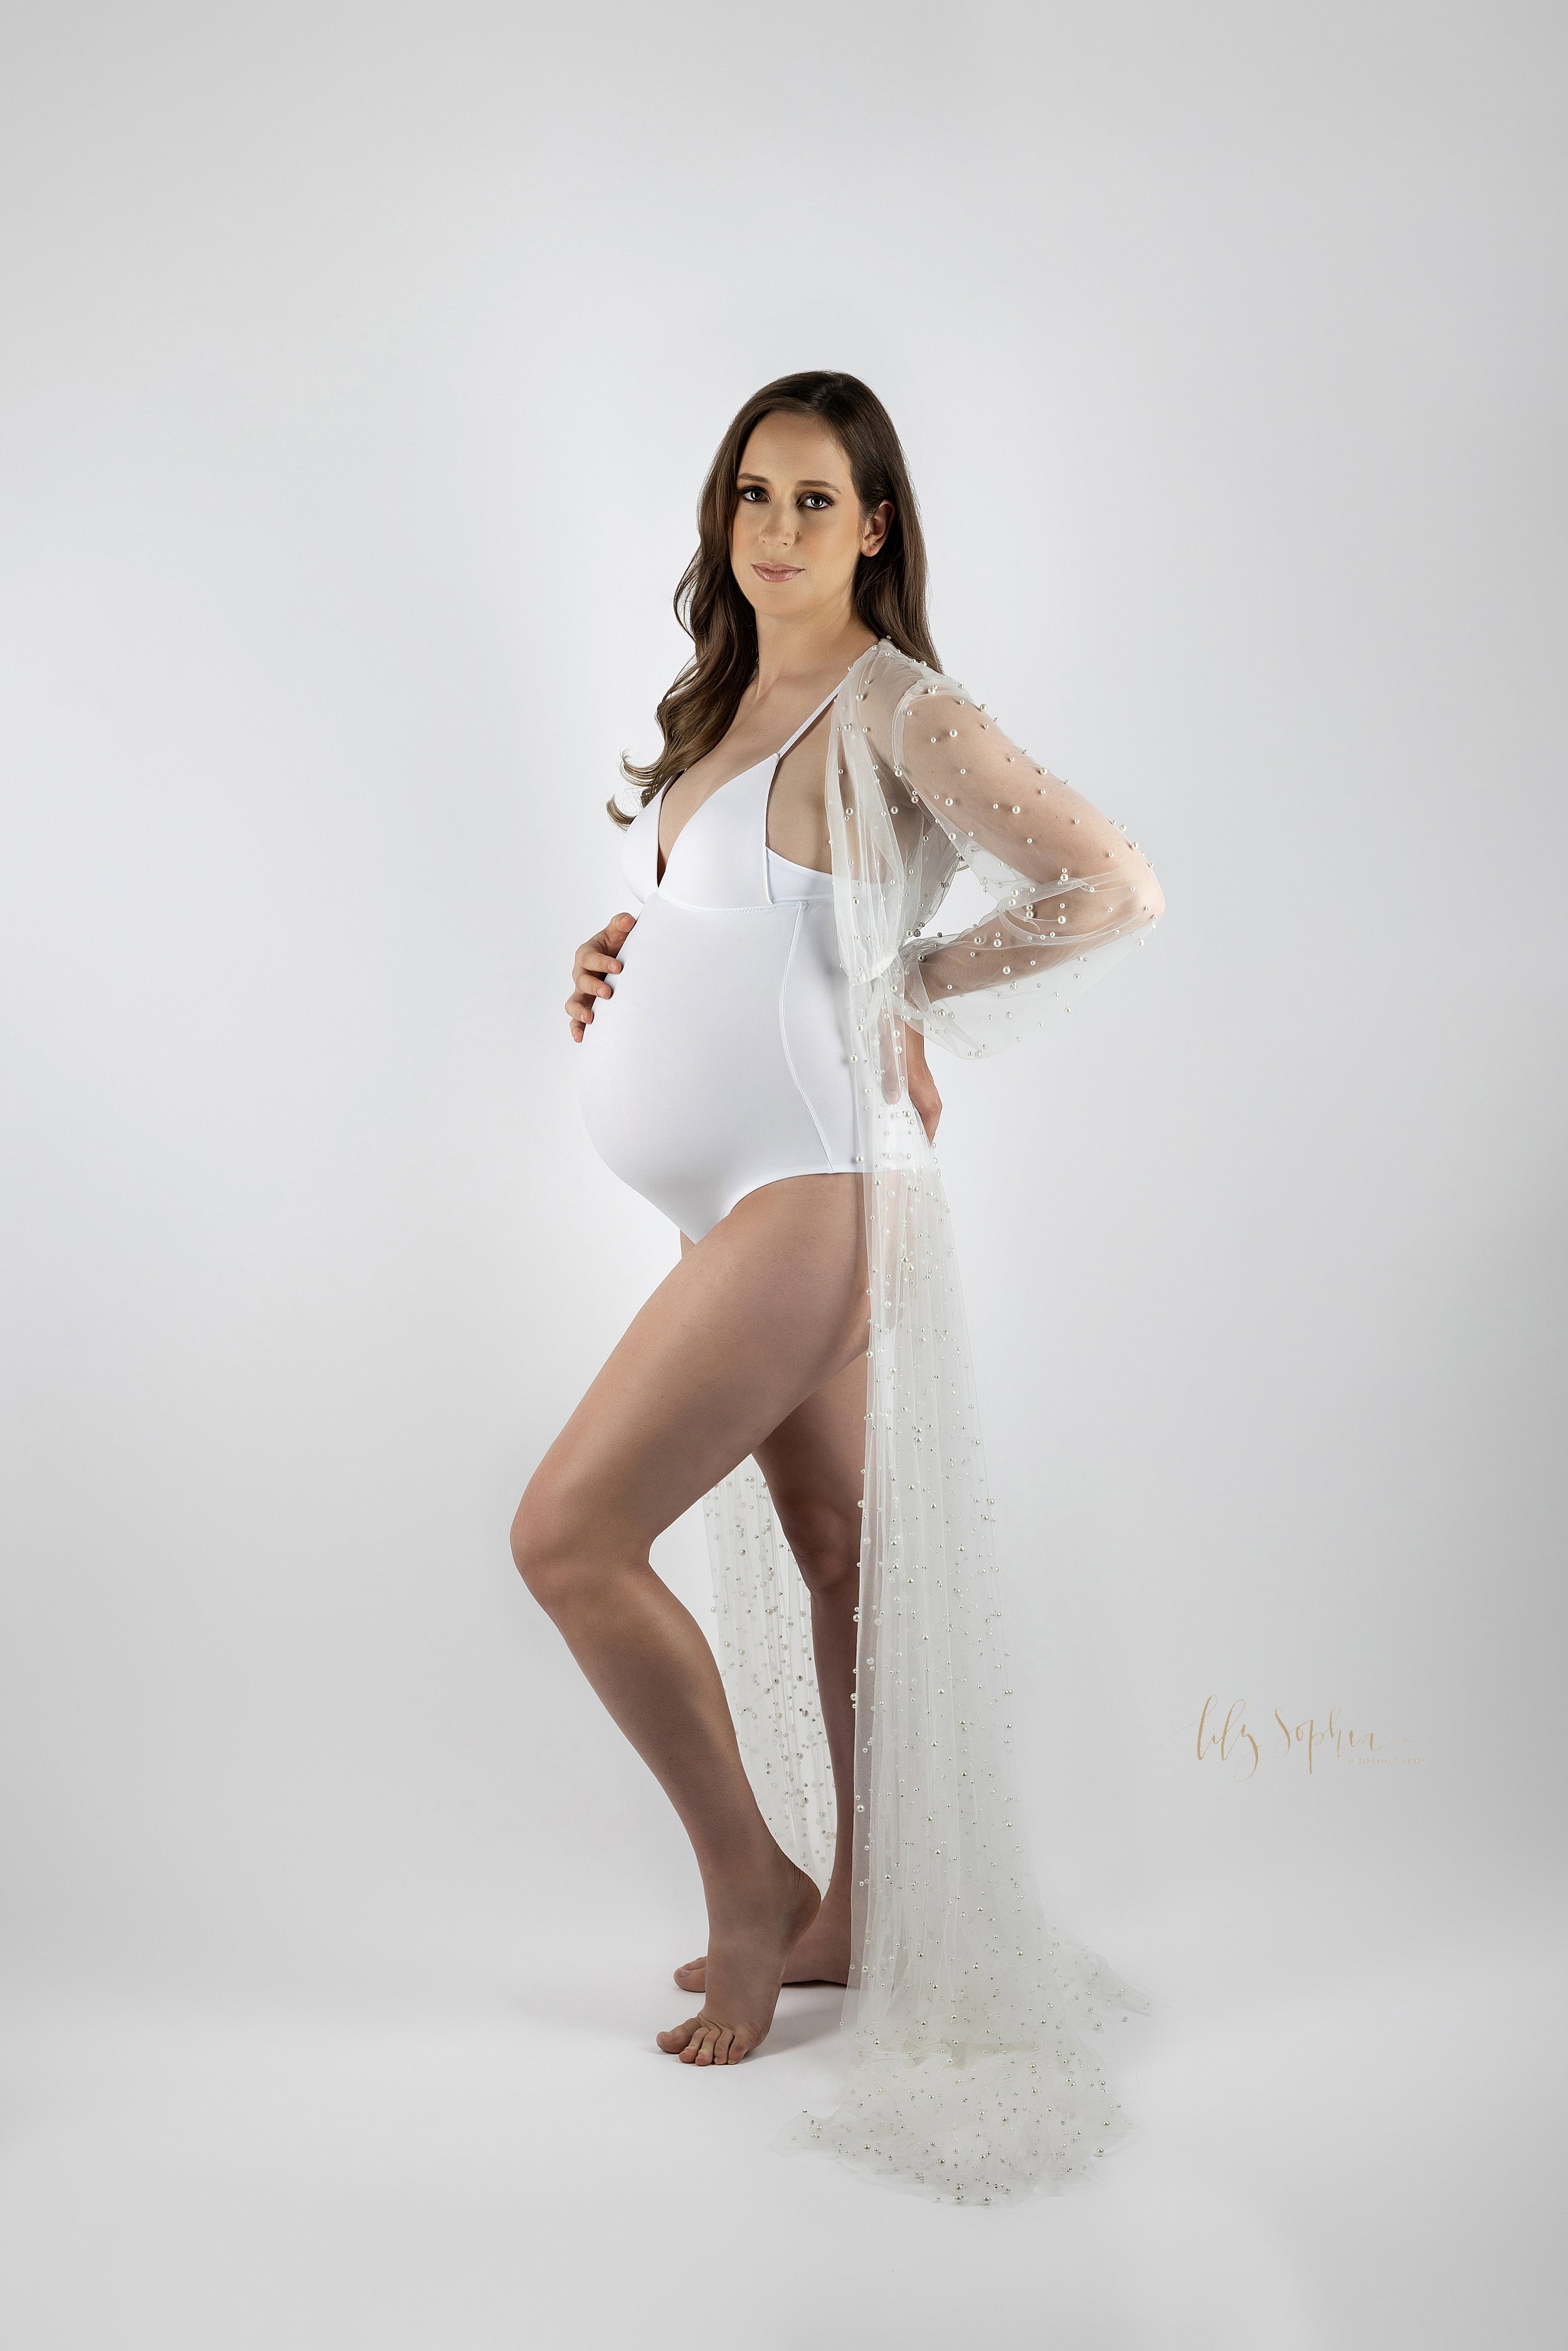 intown-atlanta-grant-park-kirkwood-decatur-modern-maternity-studio-fine-art-fashion-portraits-pregnancy-bodysuit-photos_0264.jpg